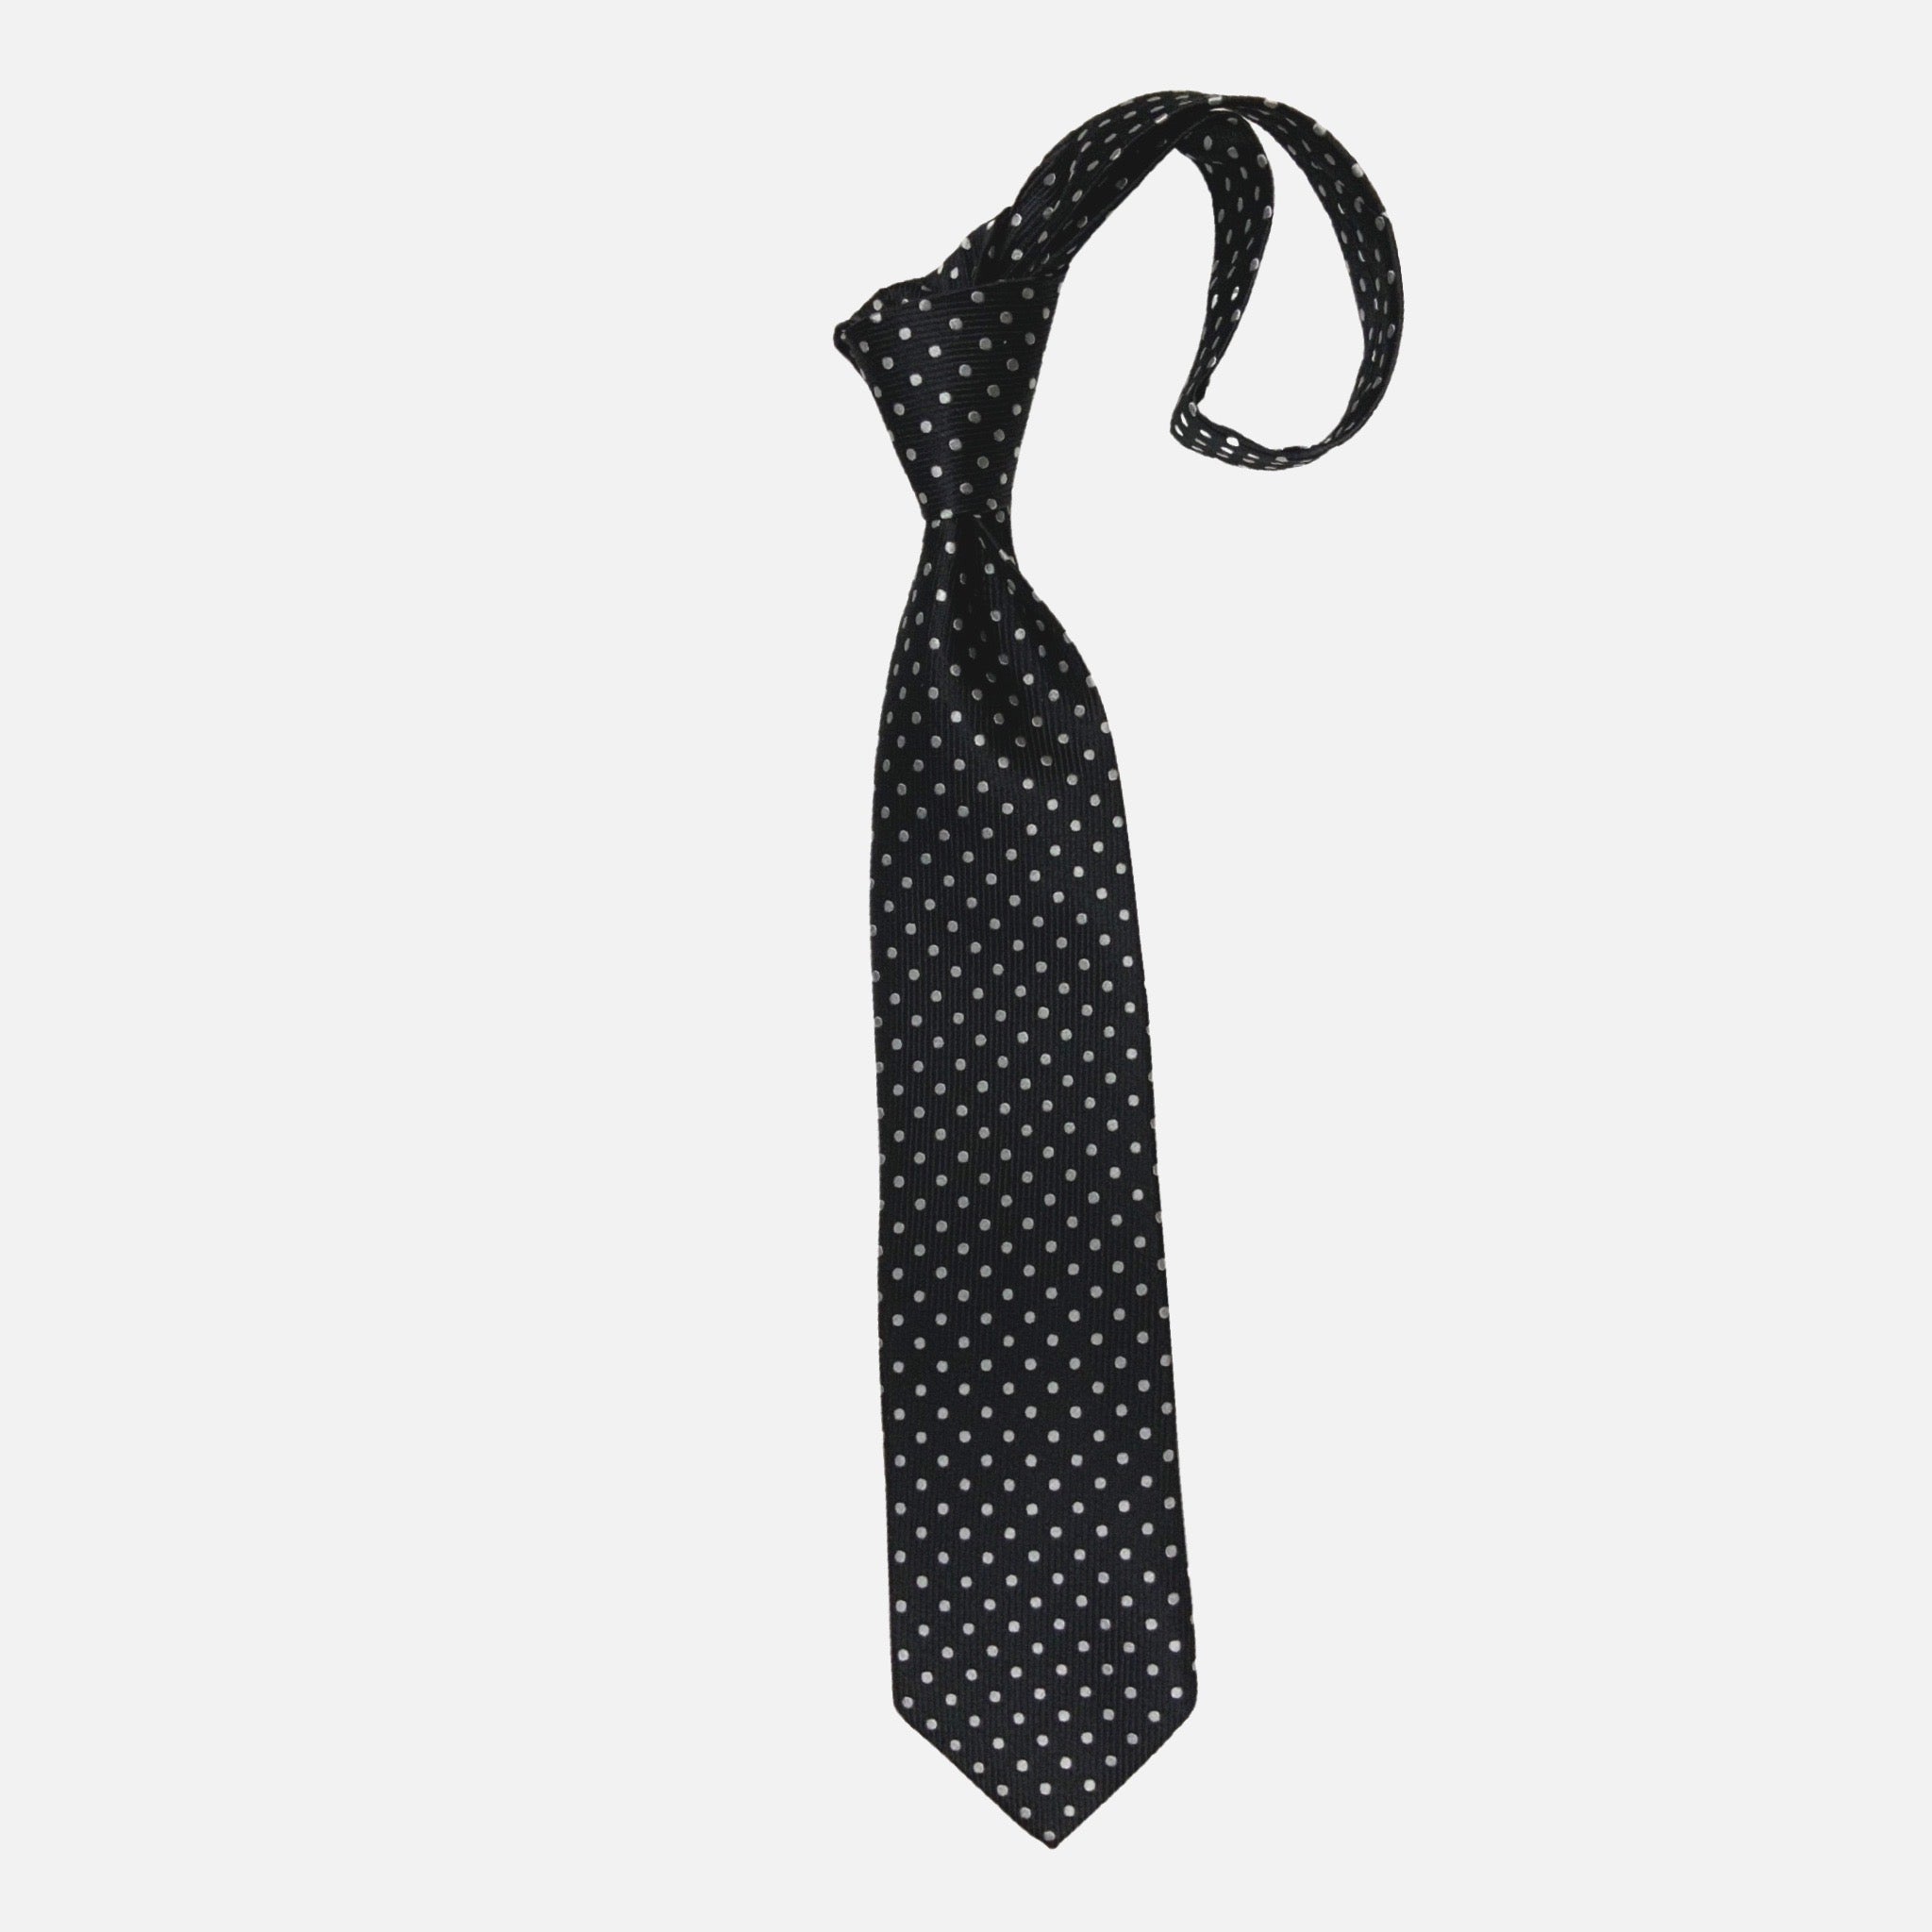 Premium Silk Tie Hand Made in USA | Black Polka Dot Tie